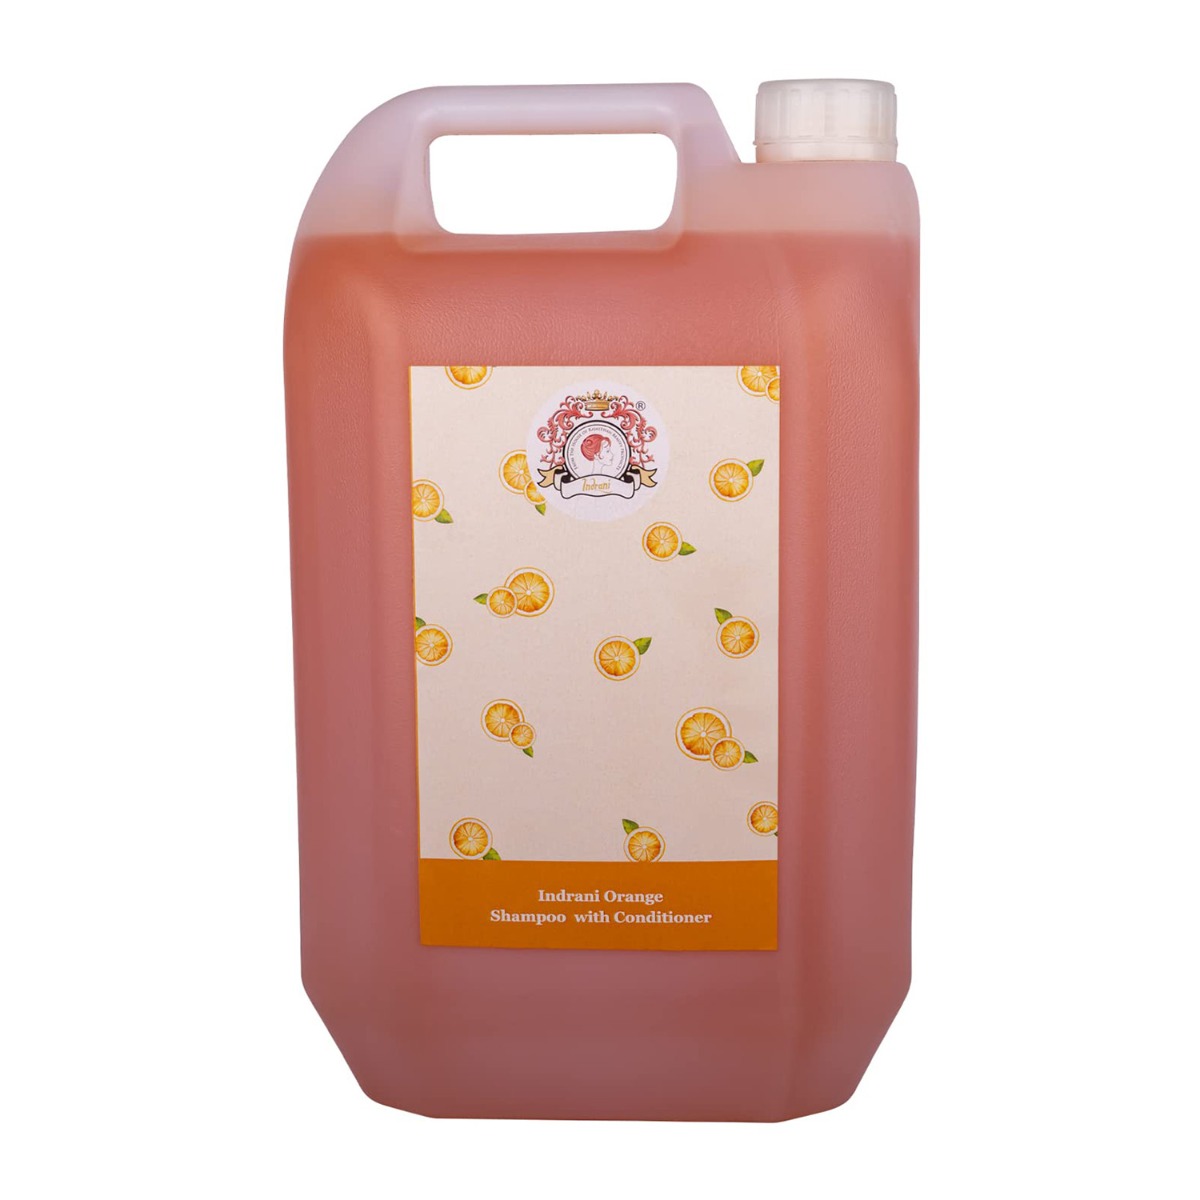 Indrani Orange Shampoo, 5ltr